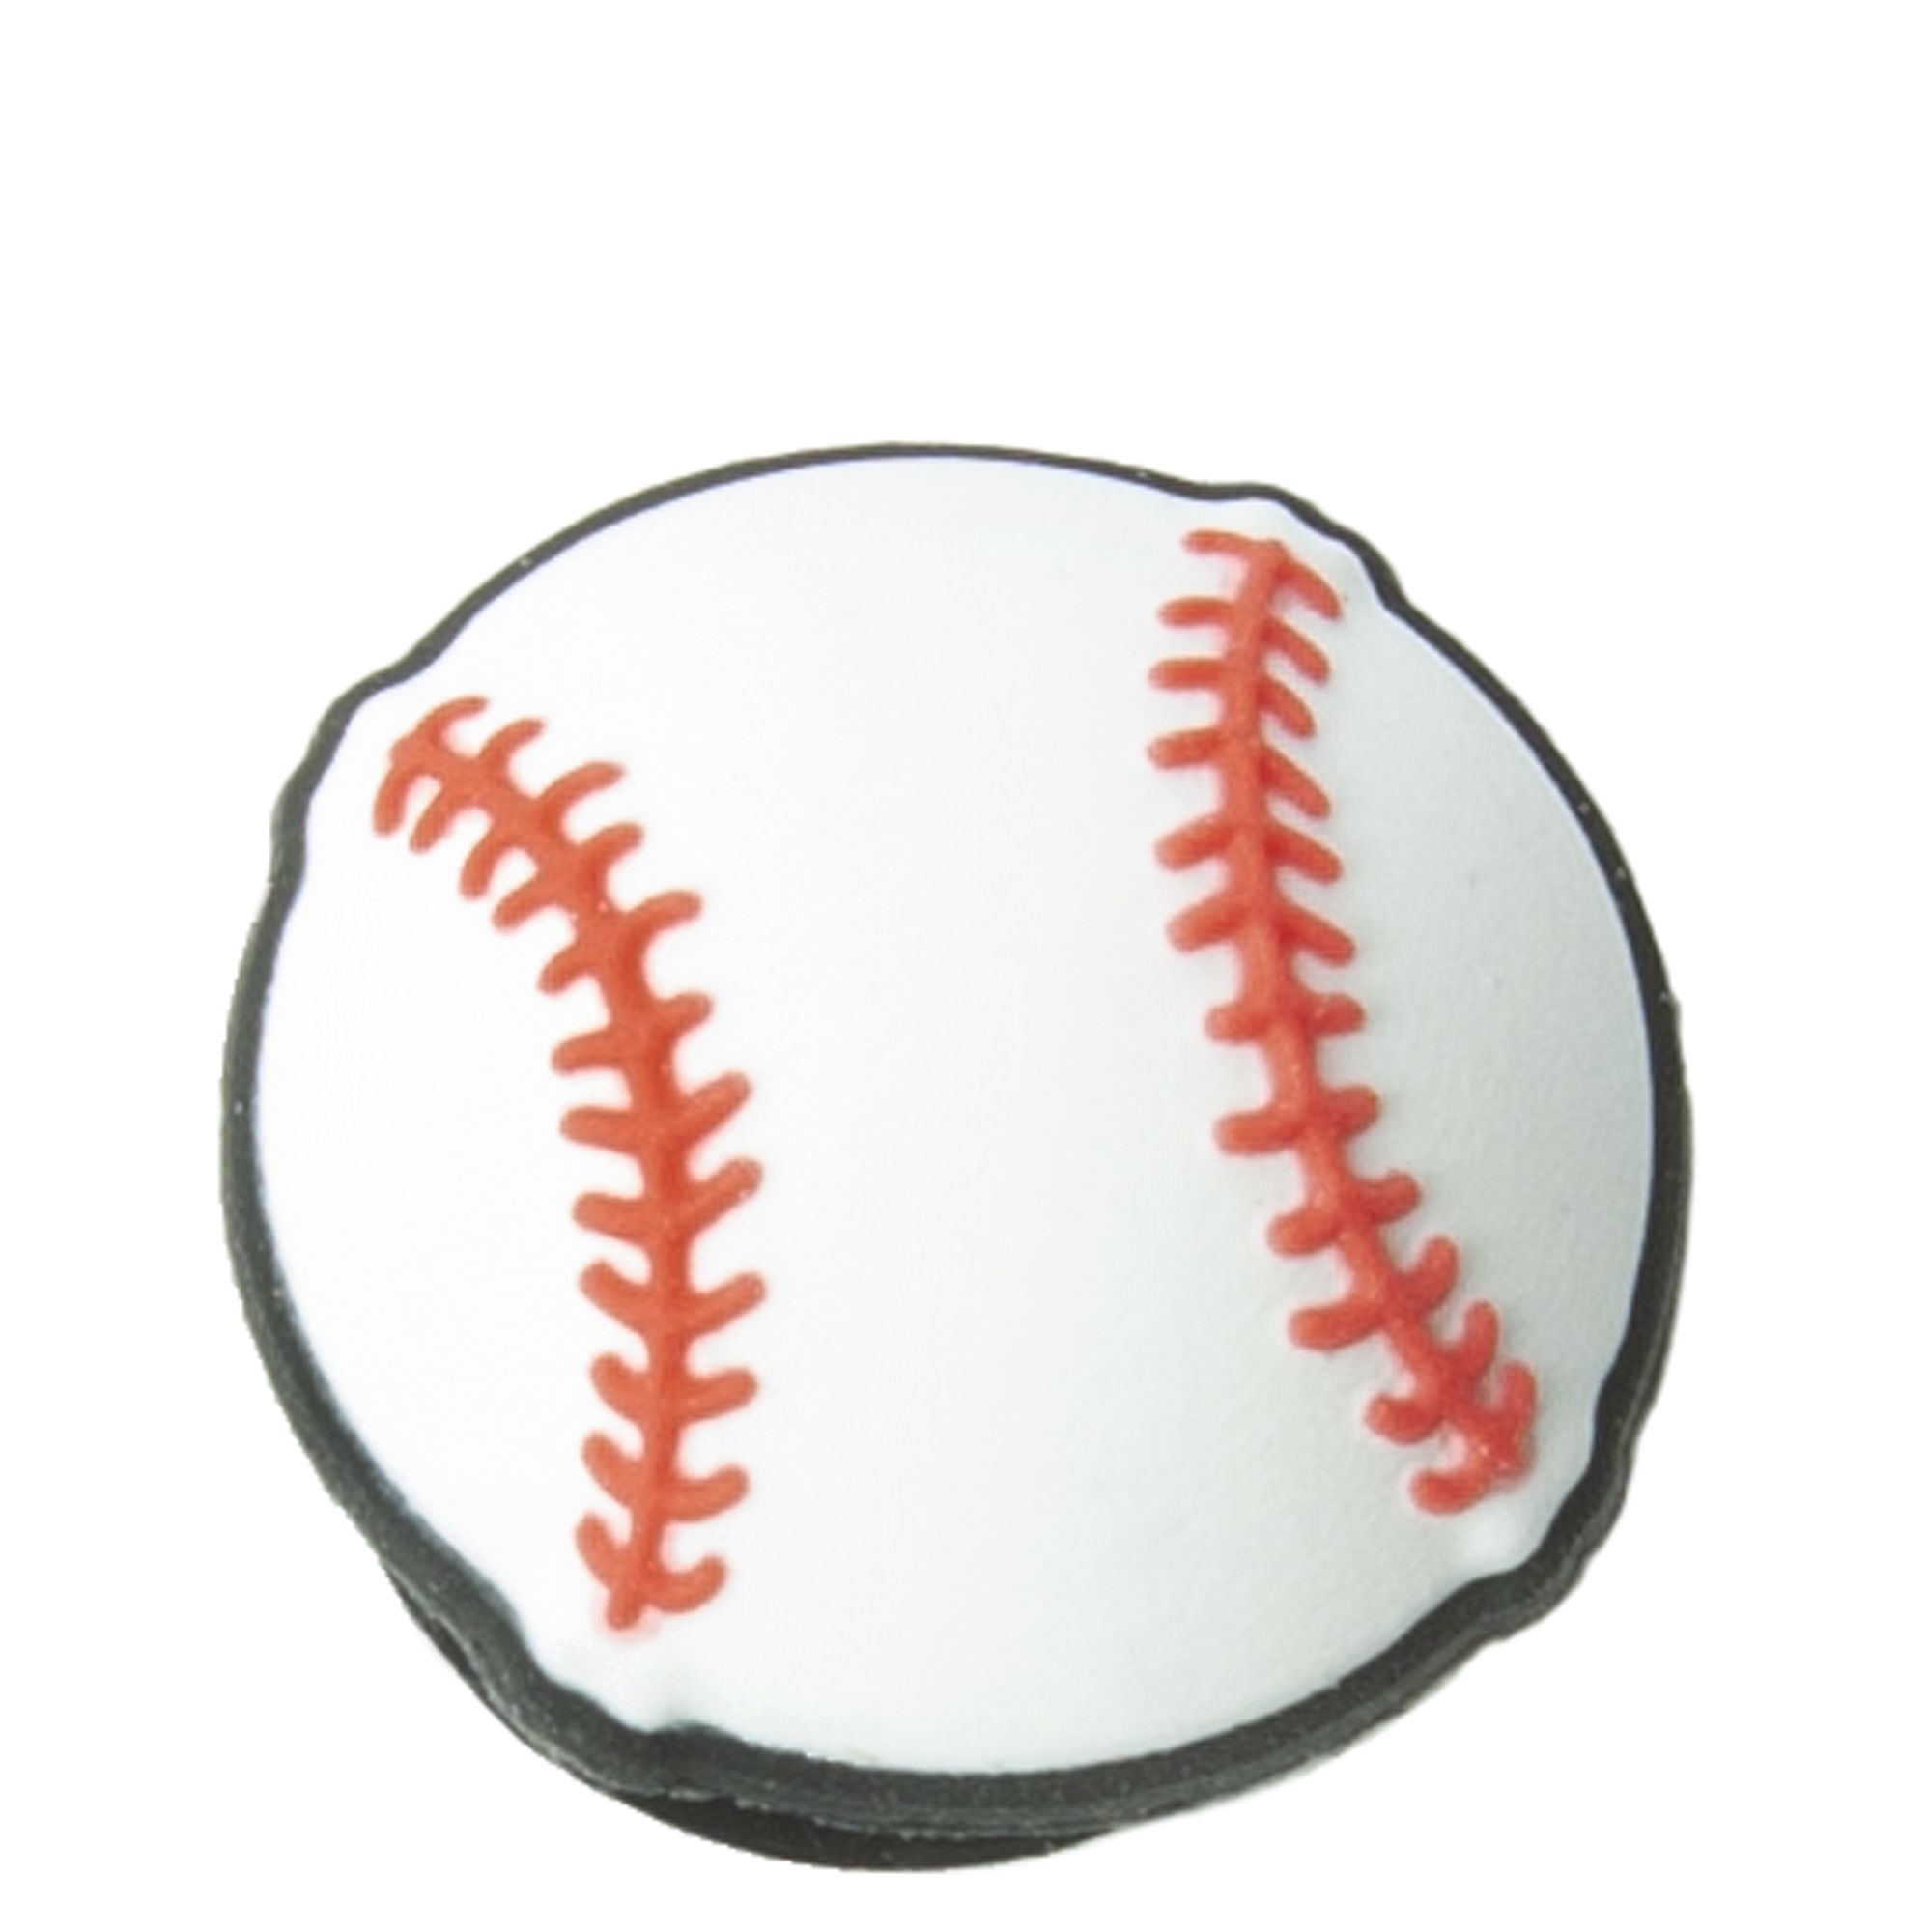  Sports Ball Shoe Charms for Croc Clog Shoe, Baseball